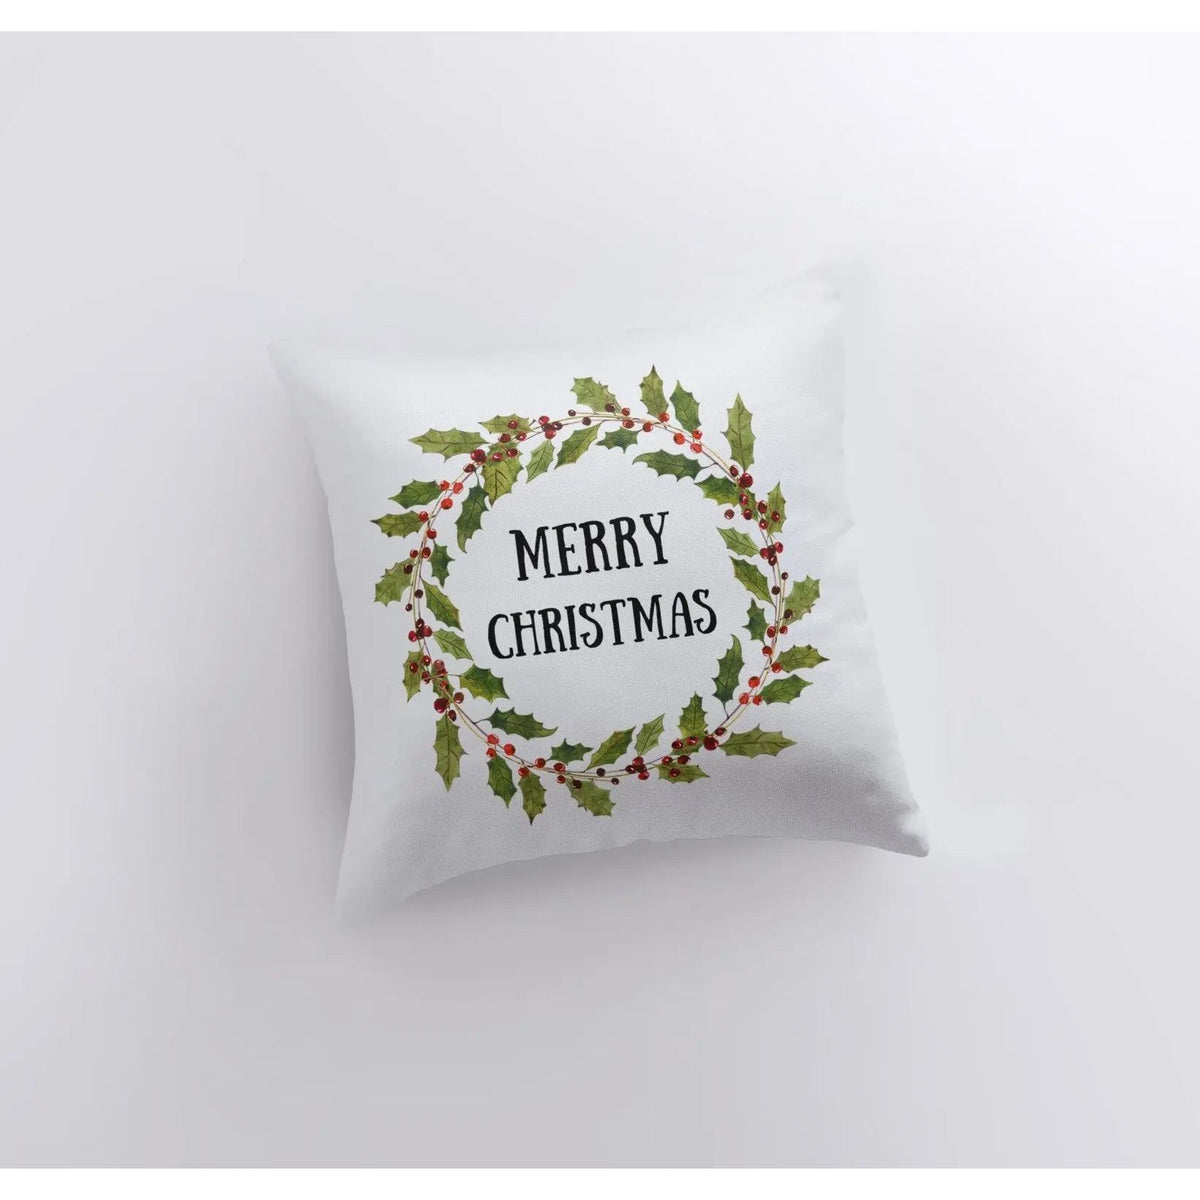 Merry Christmas Wreath Pillow | Pillow Cover